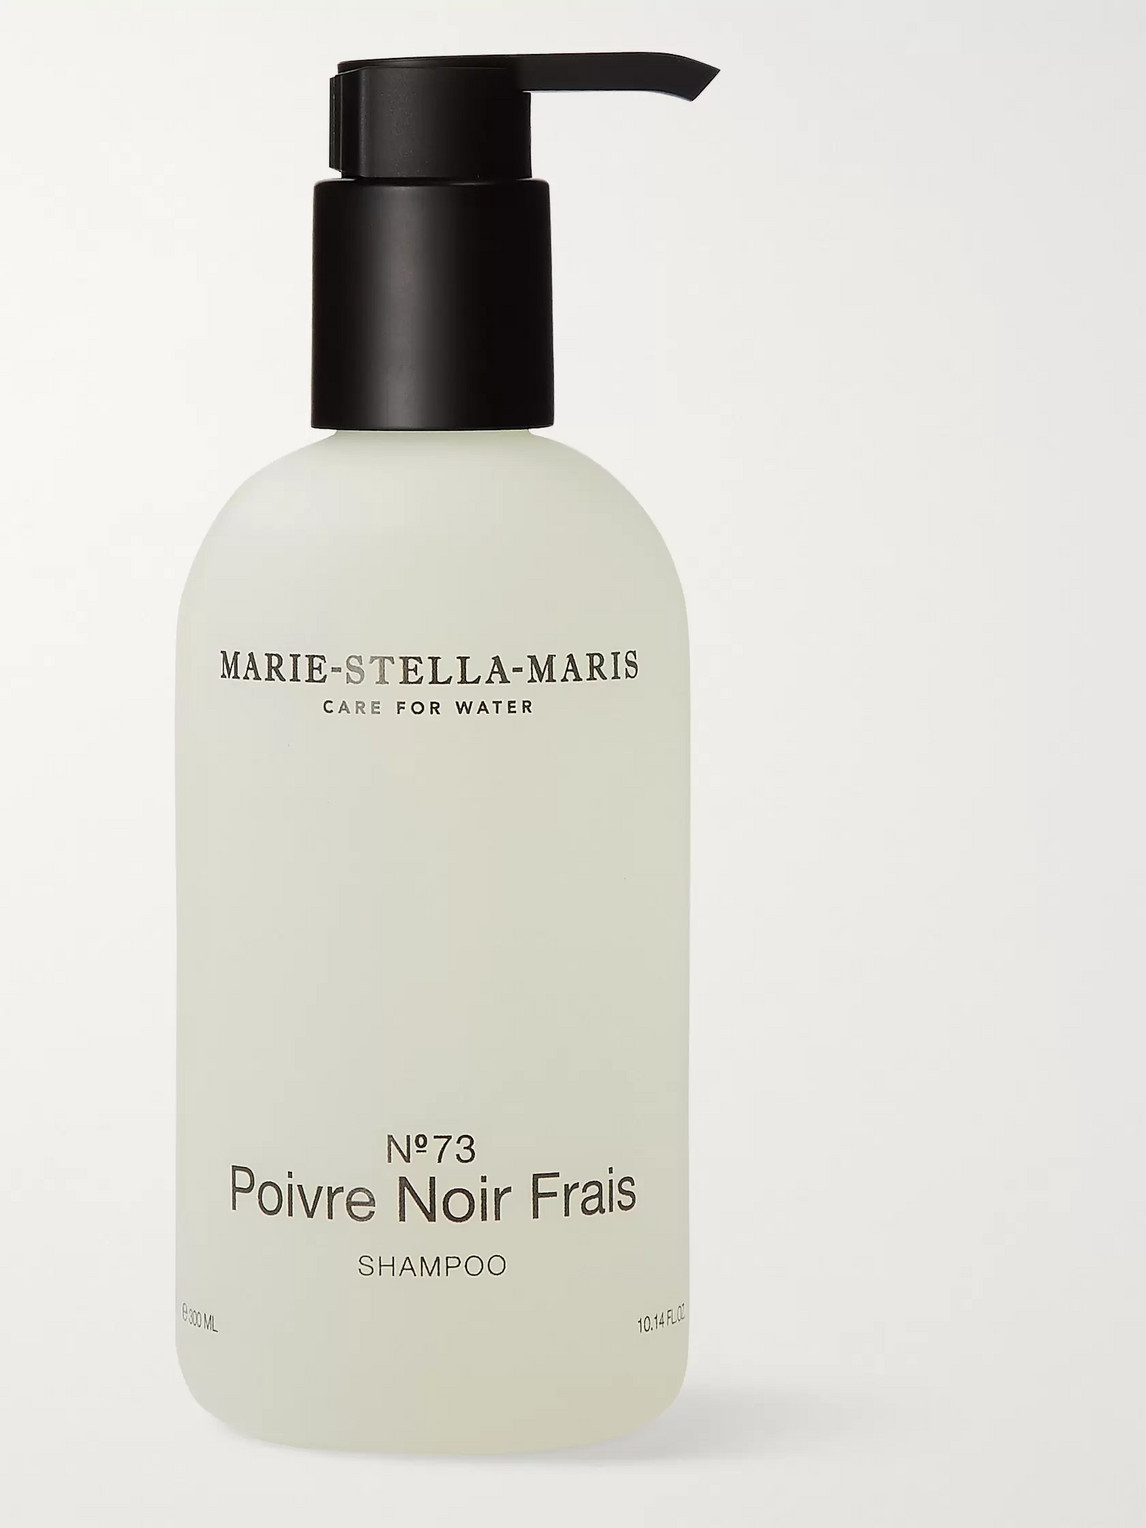 Marie-stella-maris No.73 Poivre Noir Frais Shampoo, 300ml In Colorless